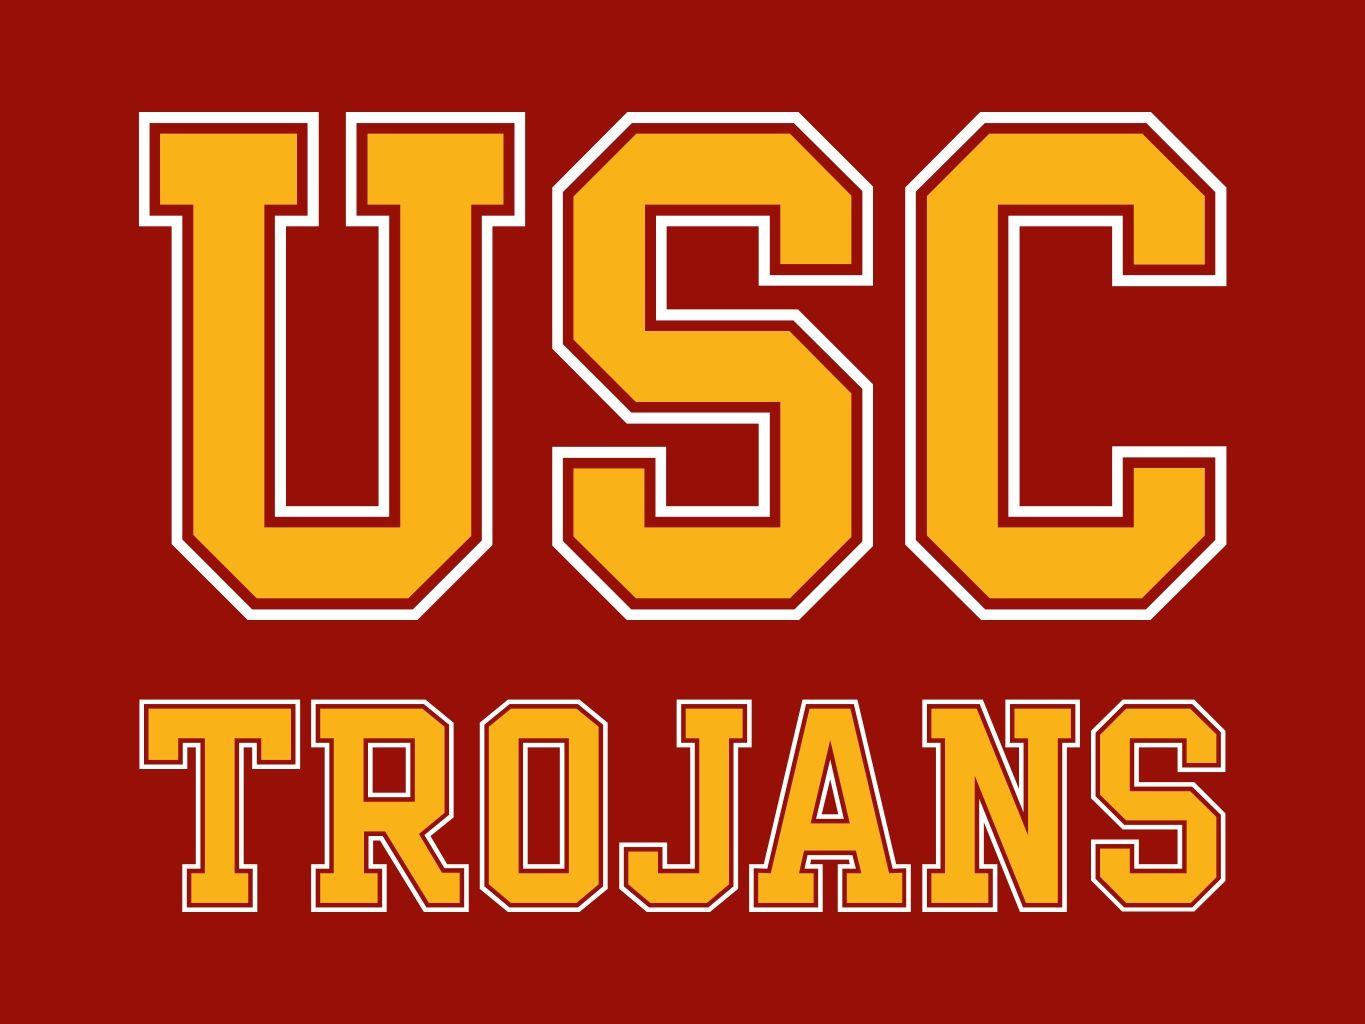 USC Logo - USC Trojans background. USC Trojan Football. Usc trojans, Football